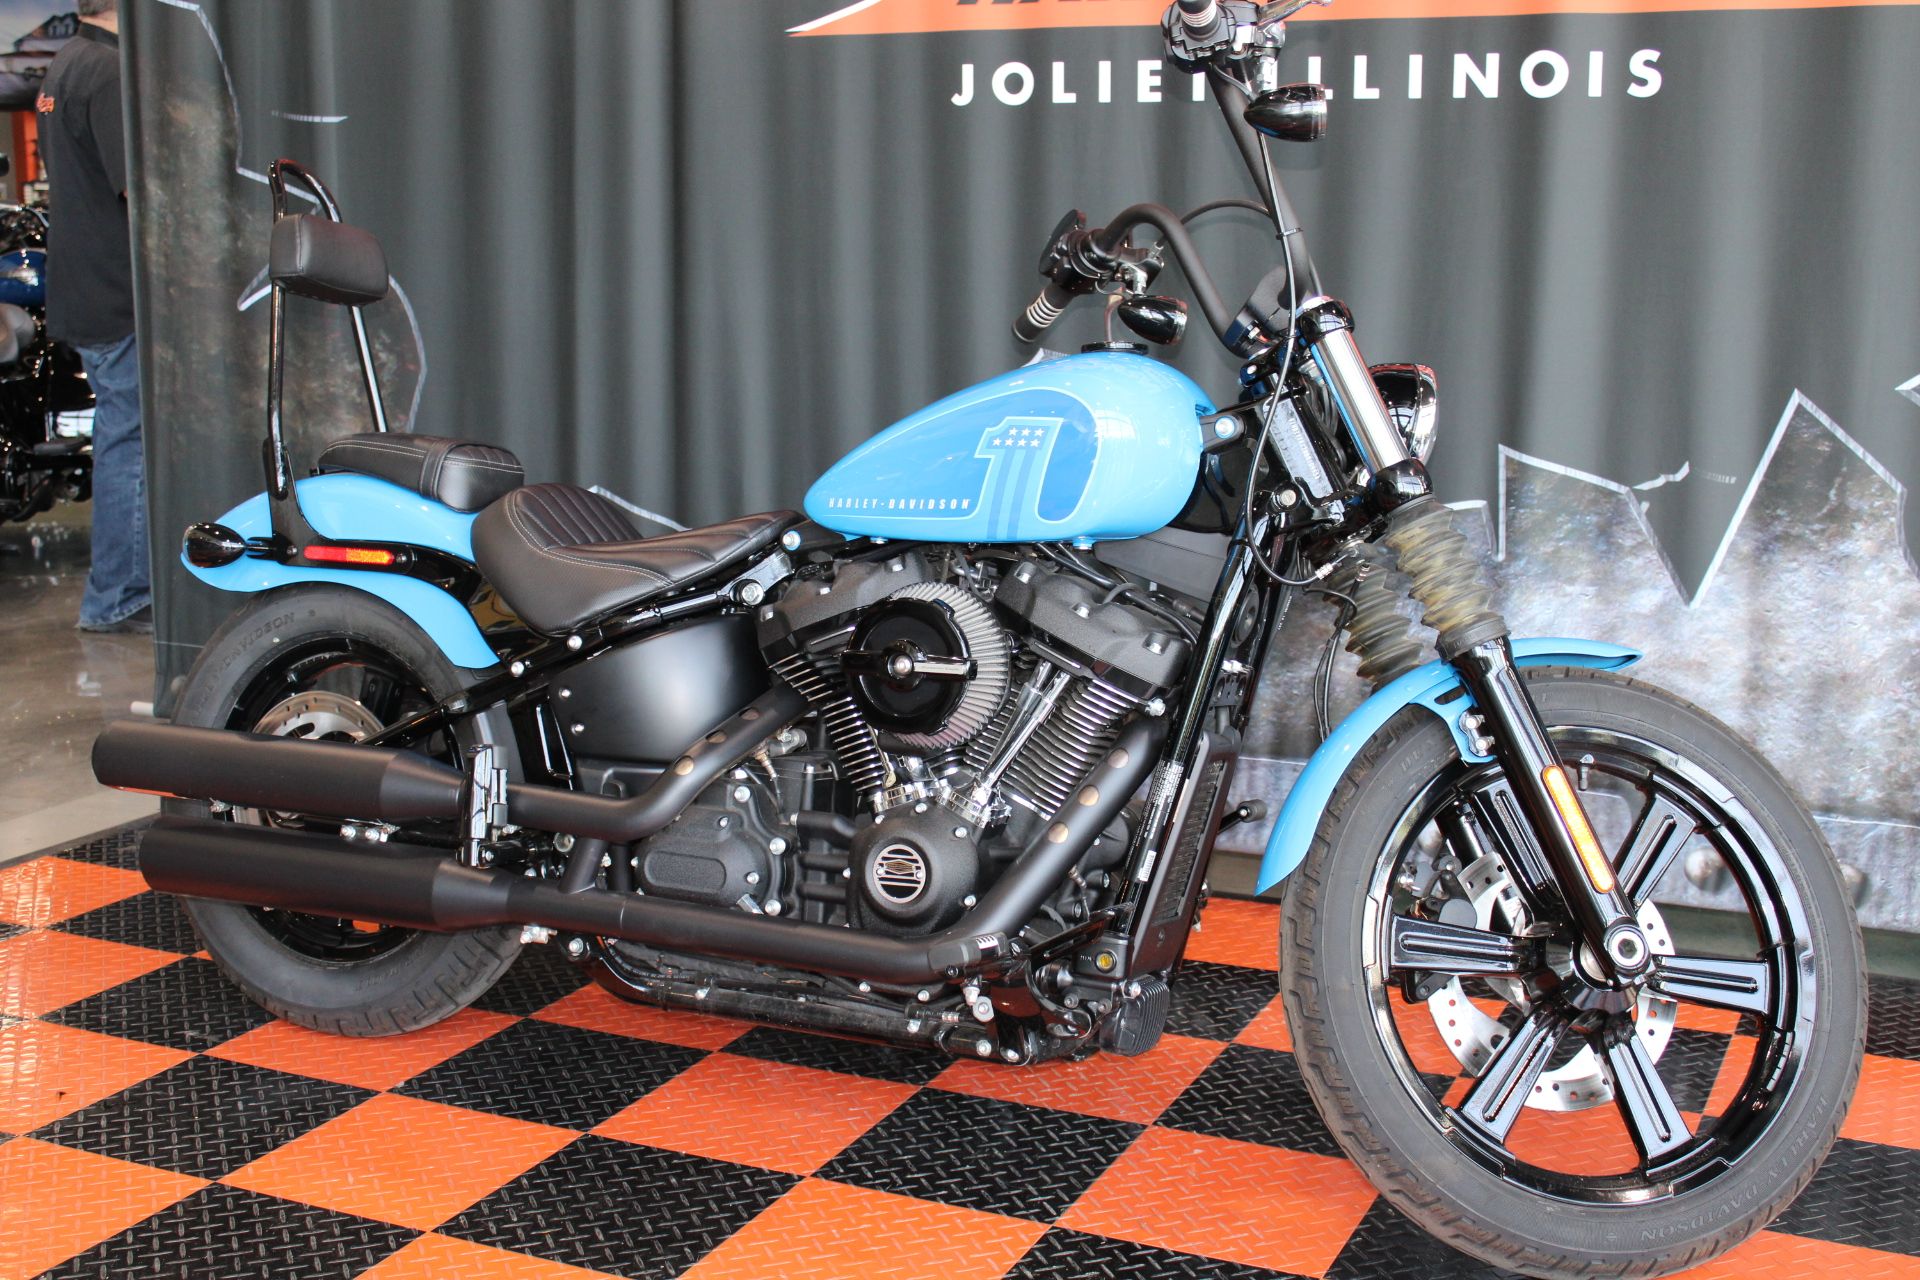 2022 Harley-Davidson Street Bob® 114 in Shorewood, Illinois - Photo 3